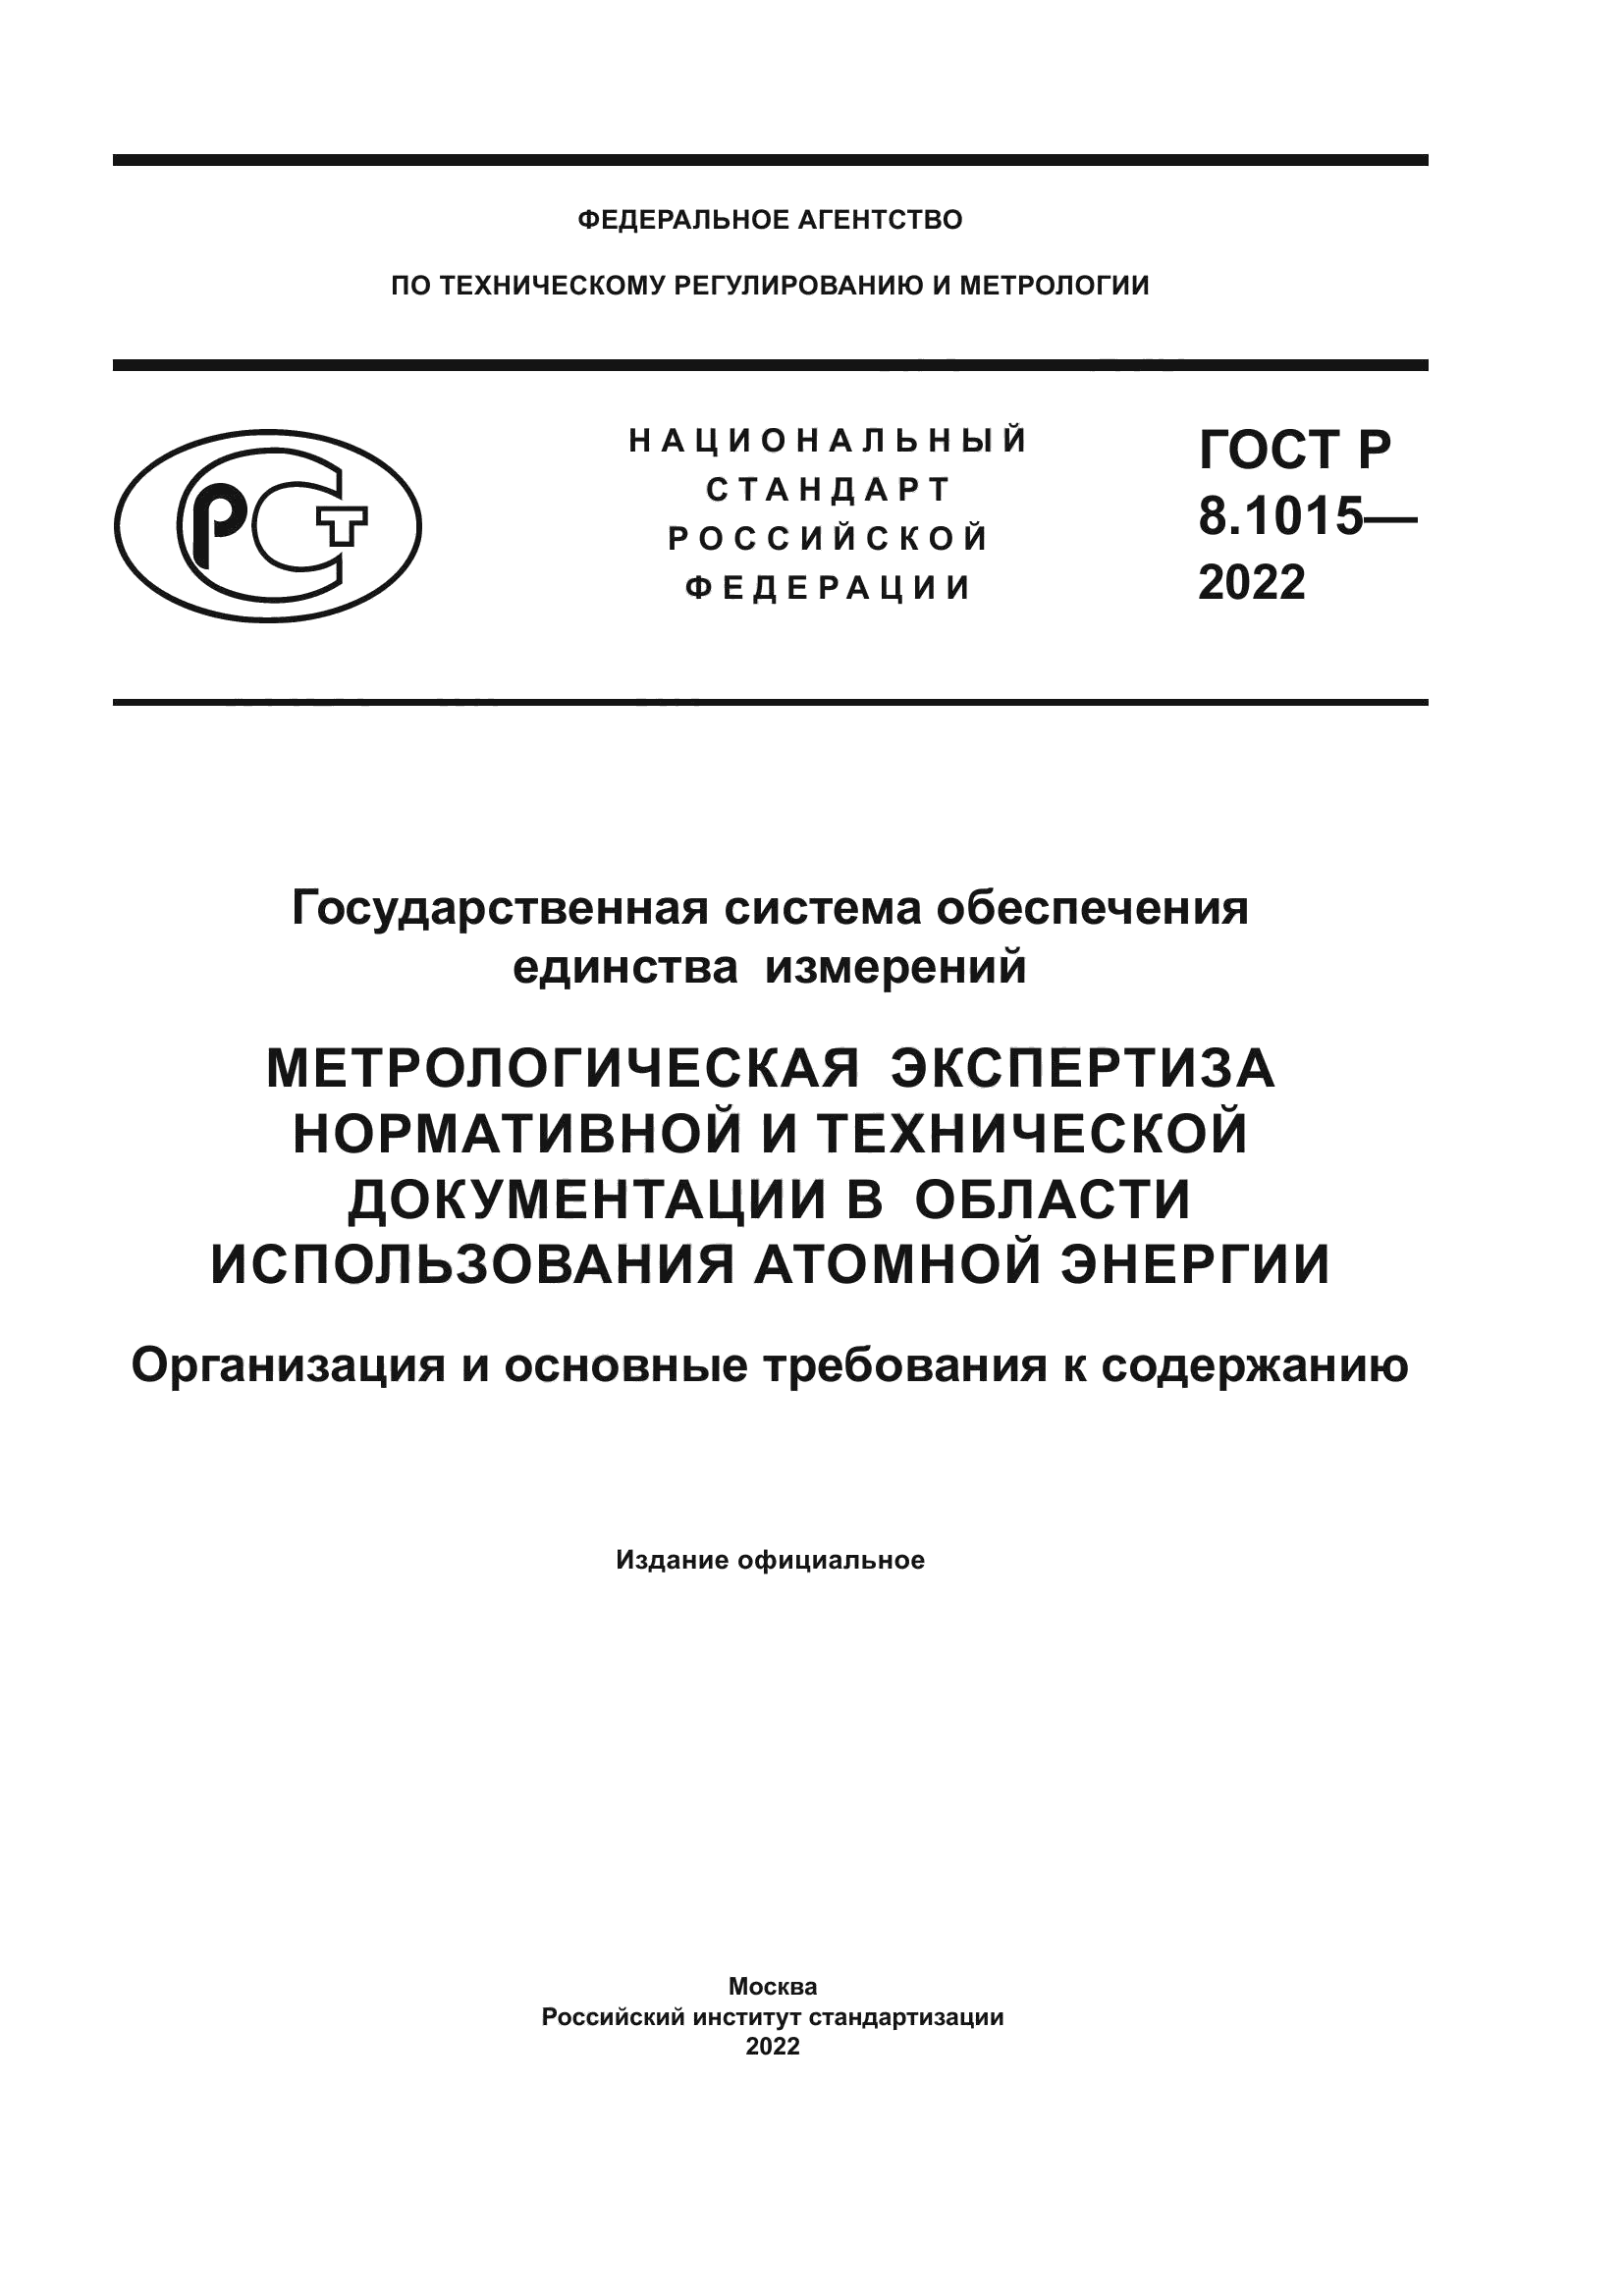 ГОСТ Р 8.1015-2022